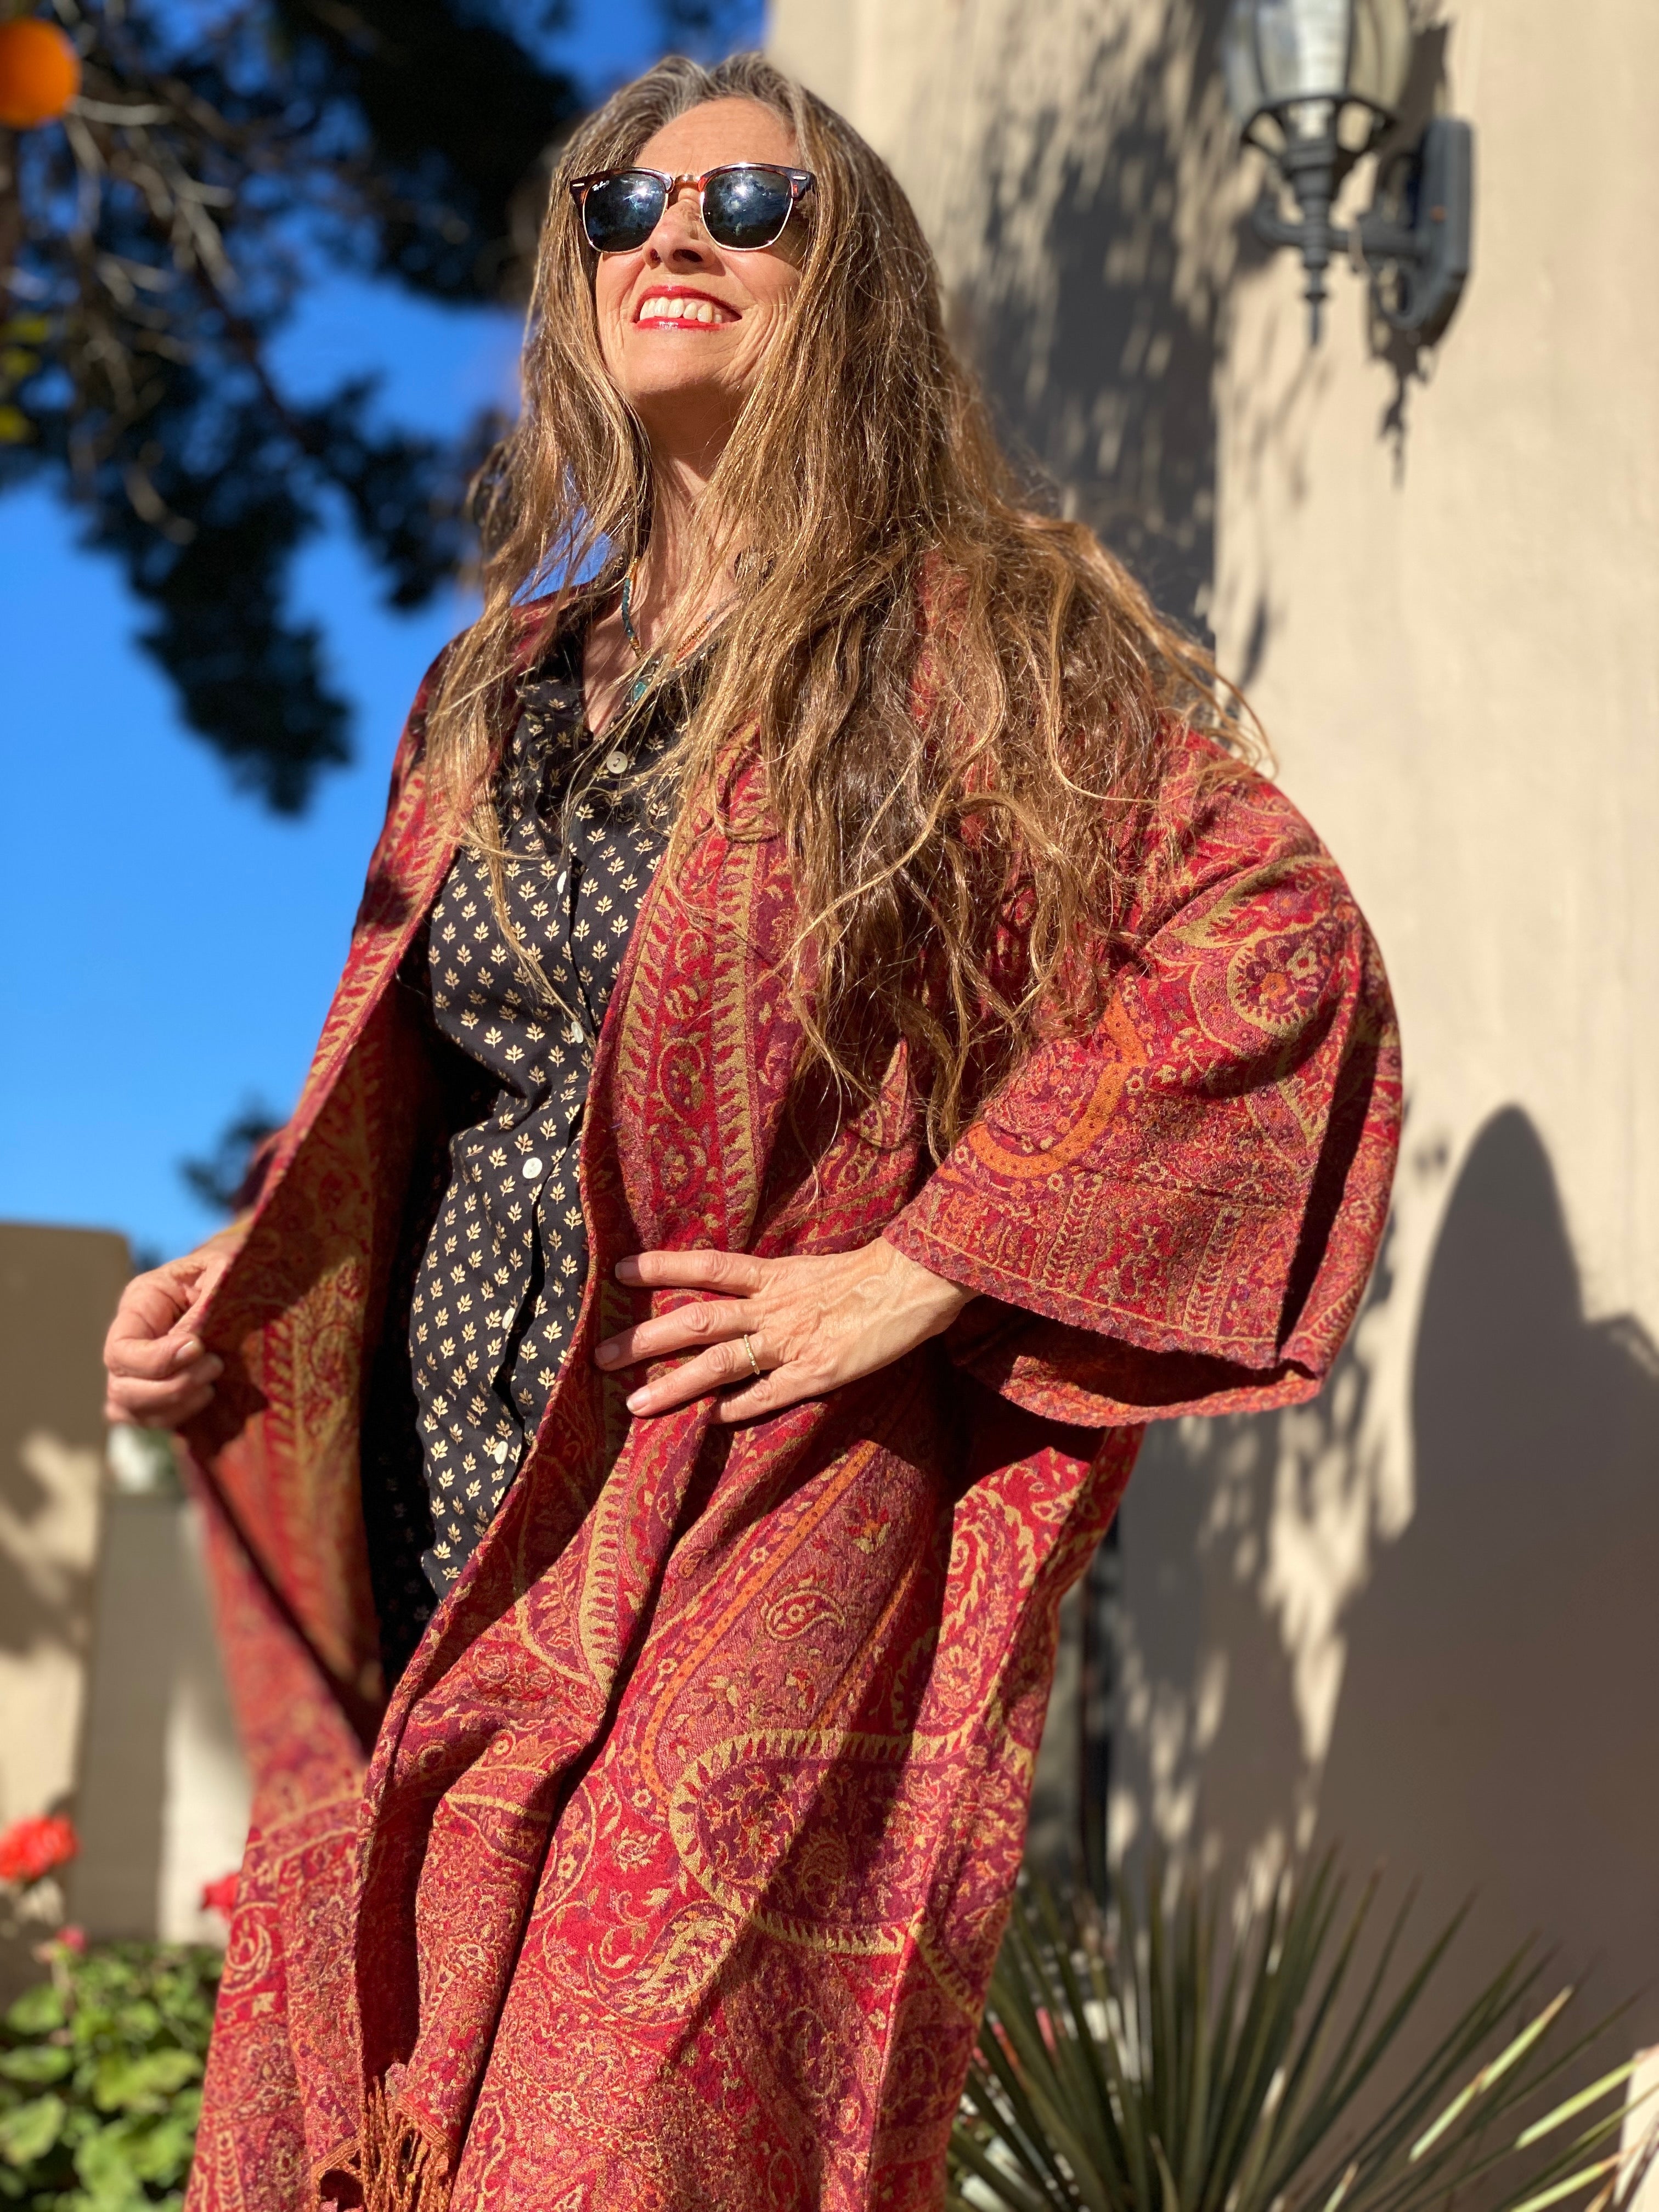 Magnifico Medici Paisley Boiled Wool Kimono Coat Reversible